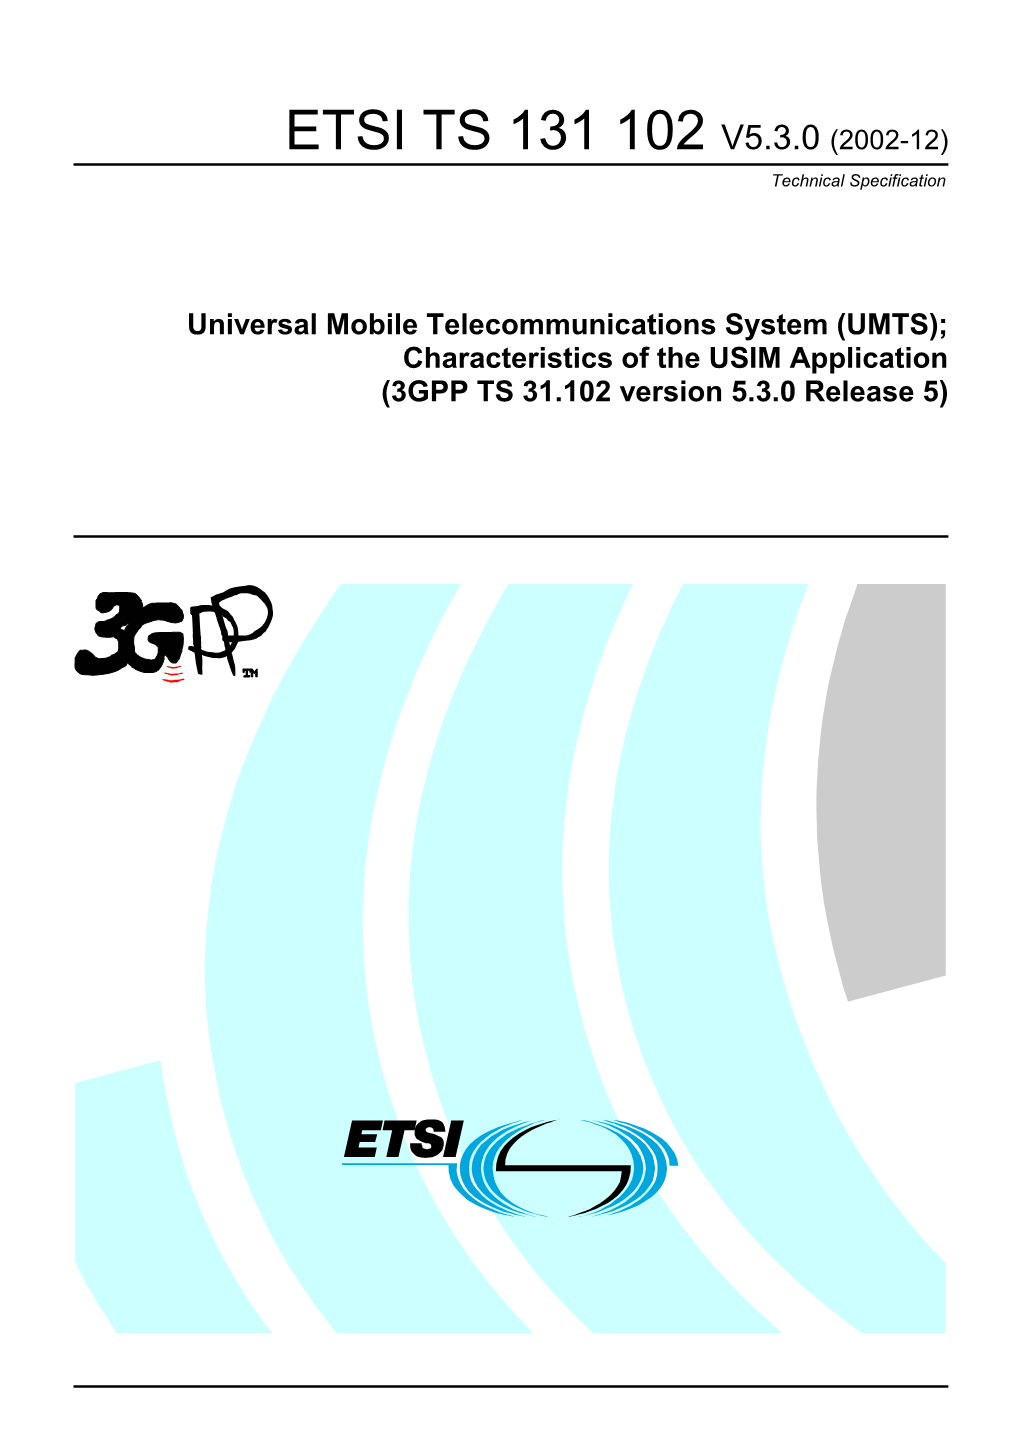 TS 131 102 V5.3.0 (2002-12) Technical Specification